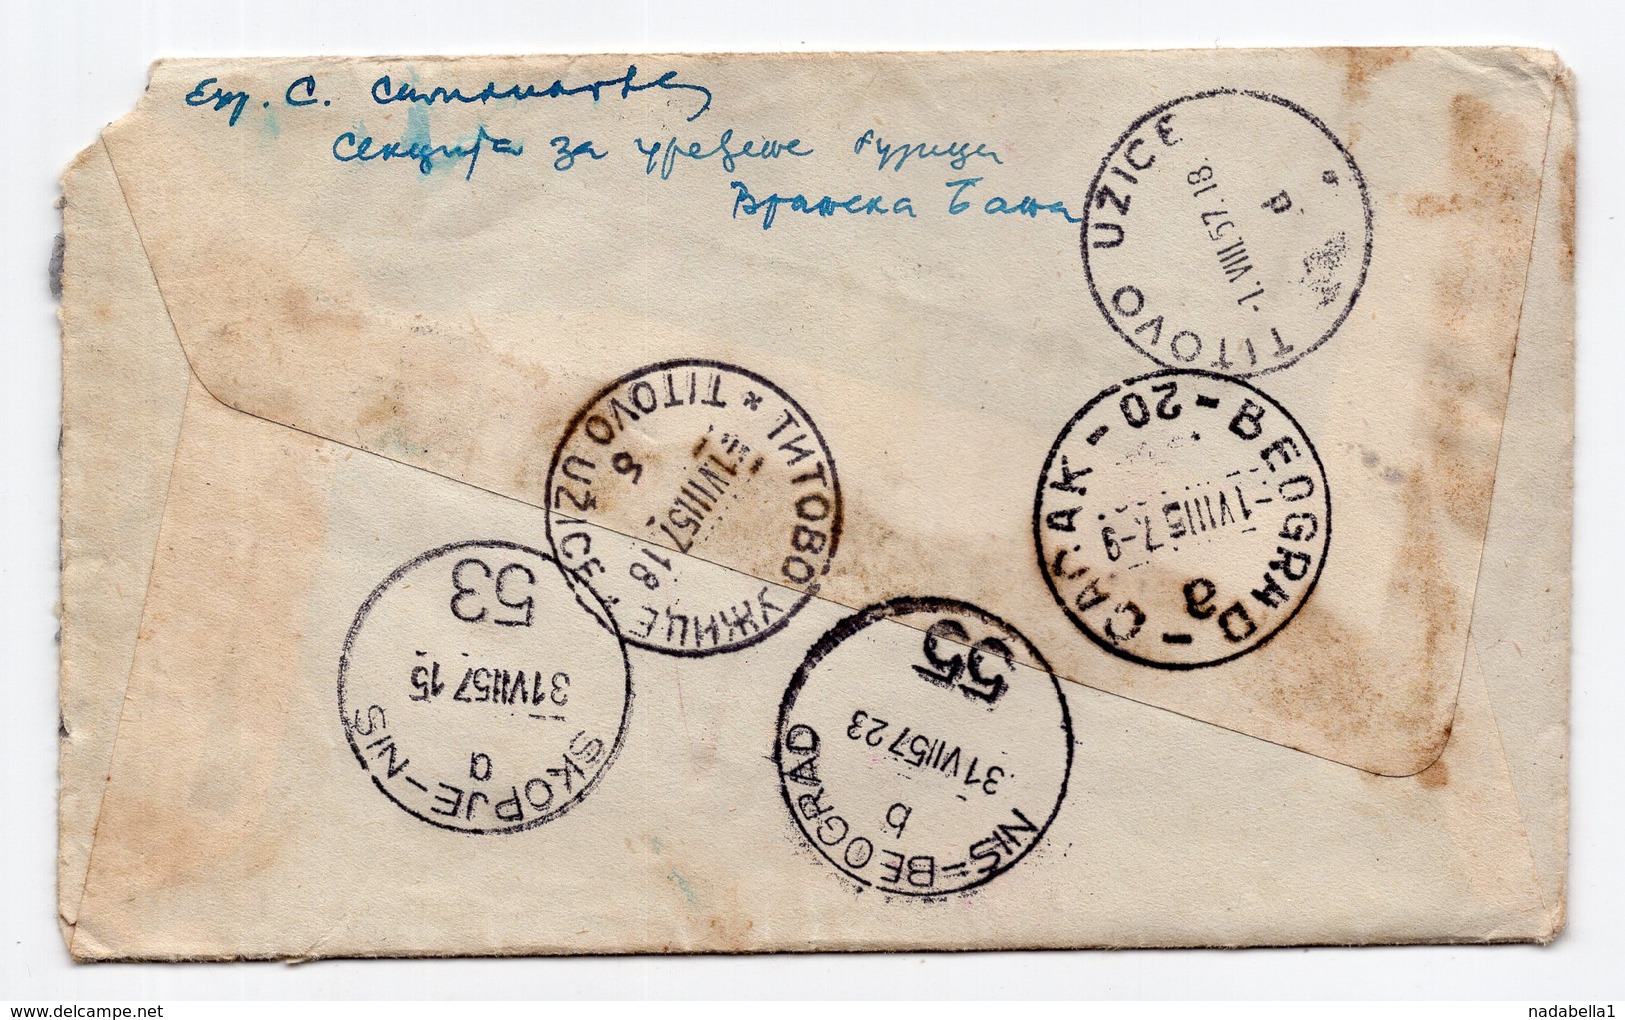 1957 YUGOSLAVIA, SERBIA, VRANJE TO TITOVO UZICE, TPO 53, TPO 55, TPO 20, REGISTERED COVER - Covers & Documents